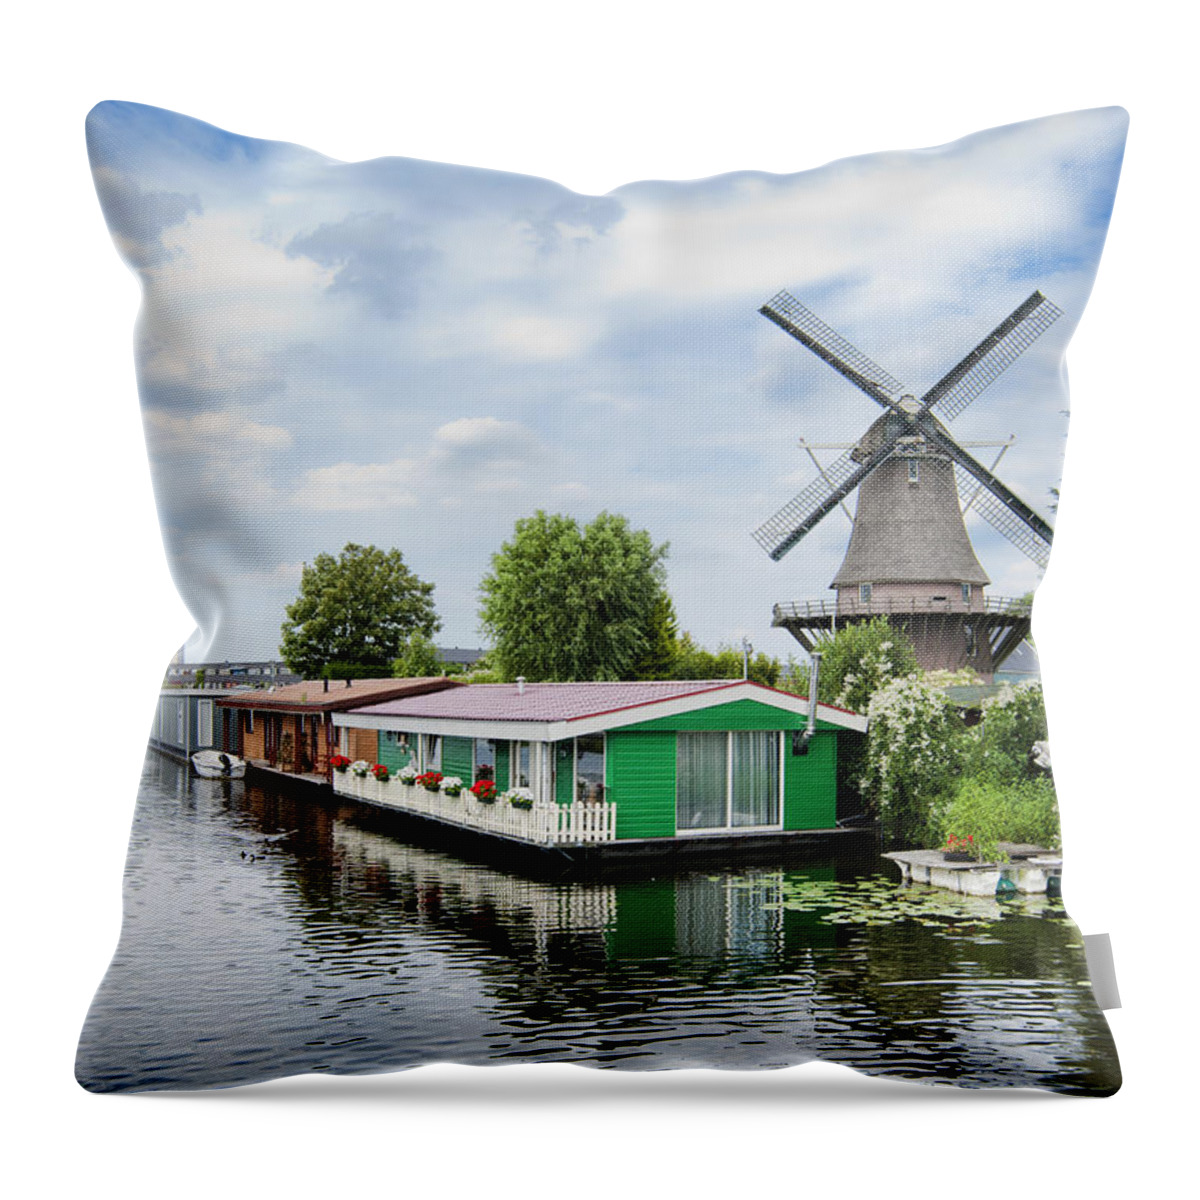 Molen Van Sloten Throw Pillow featuring the photograph Molen van Sloten and River by Phyllis Taylor